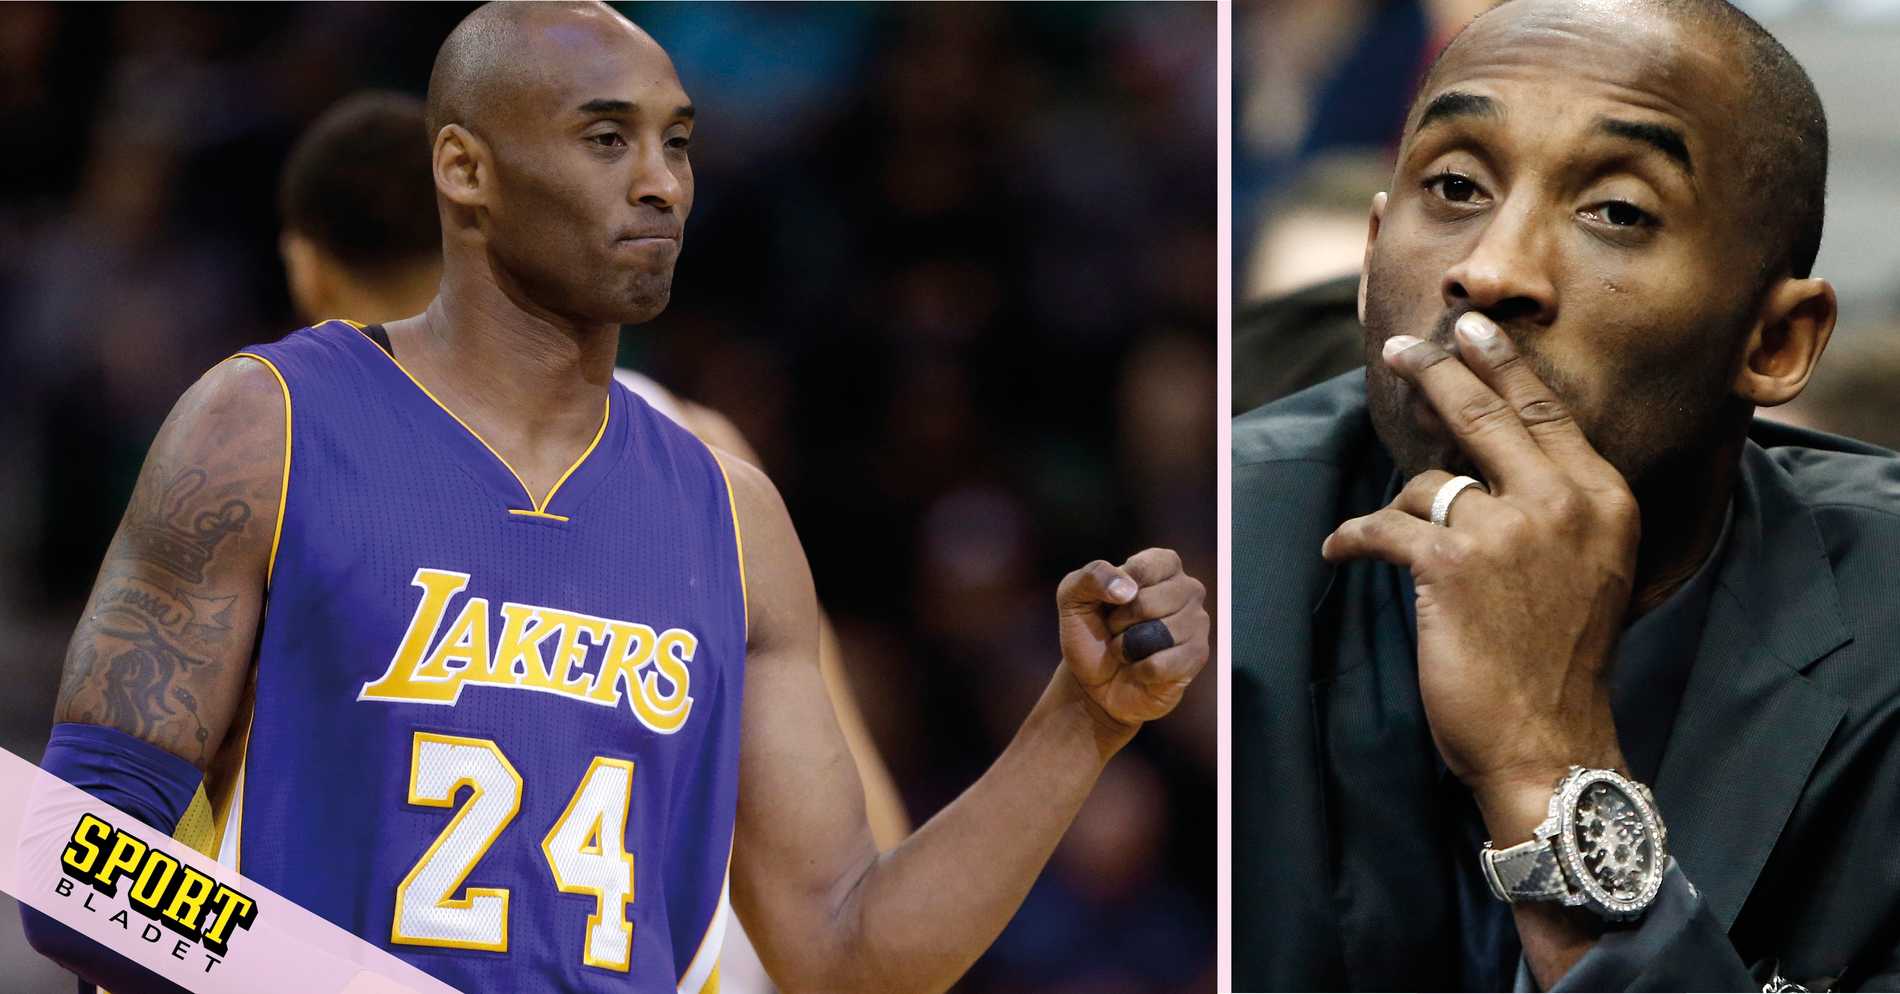 Sportlovin: Uppgifter: Kobe Bryant död i krasch